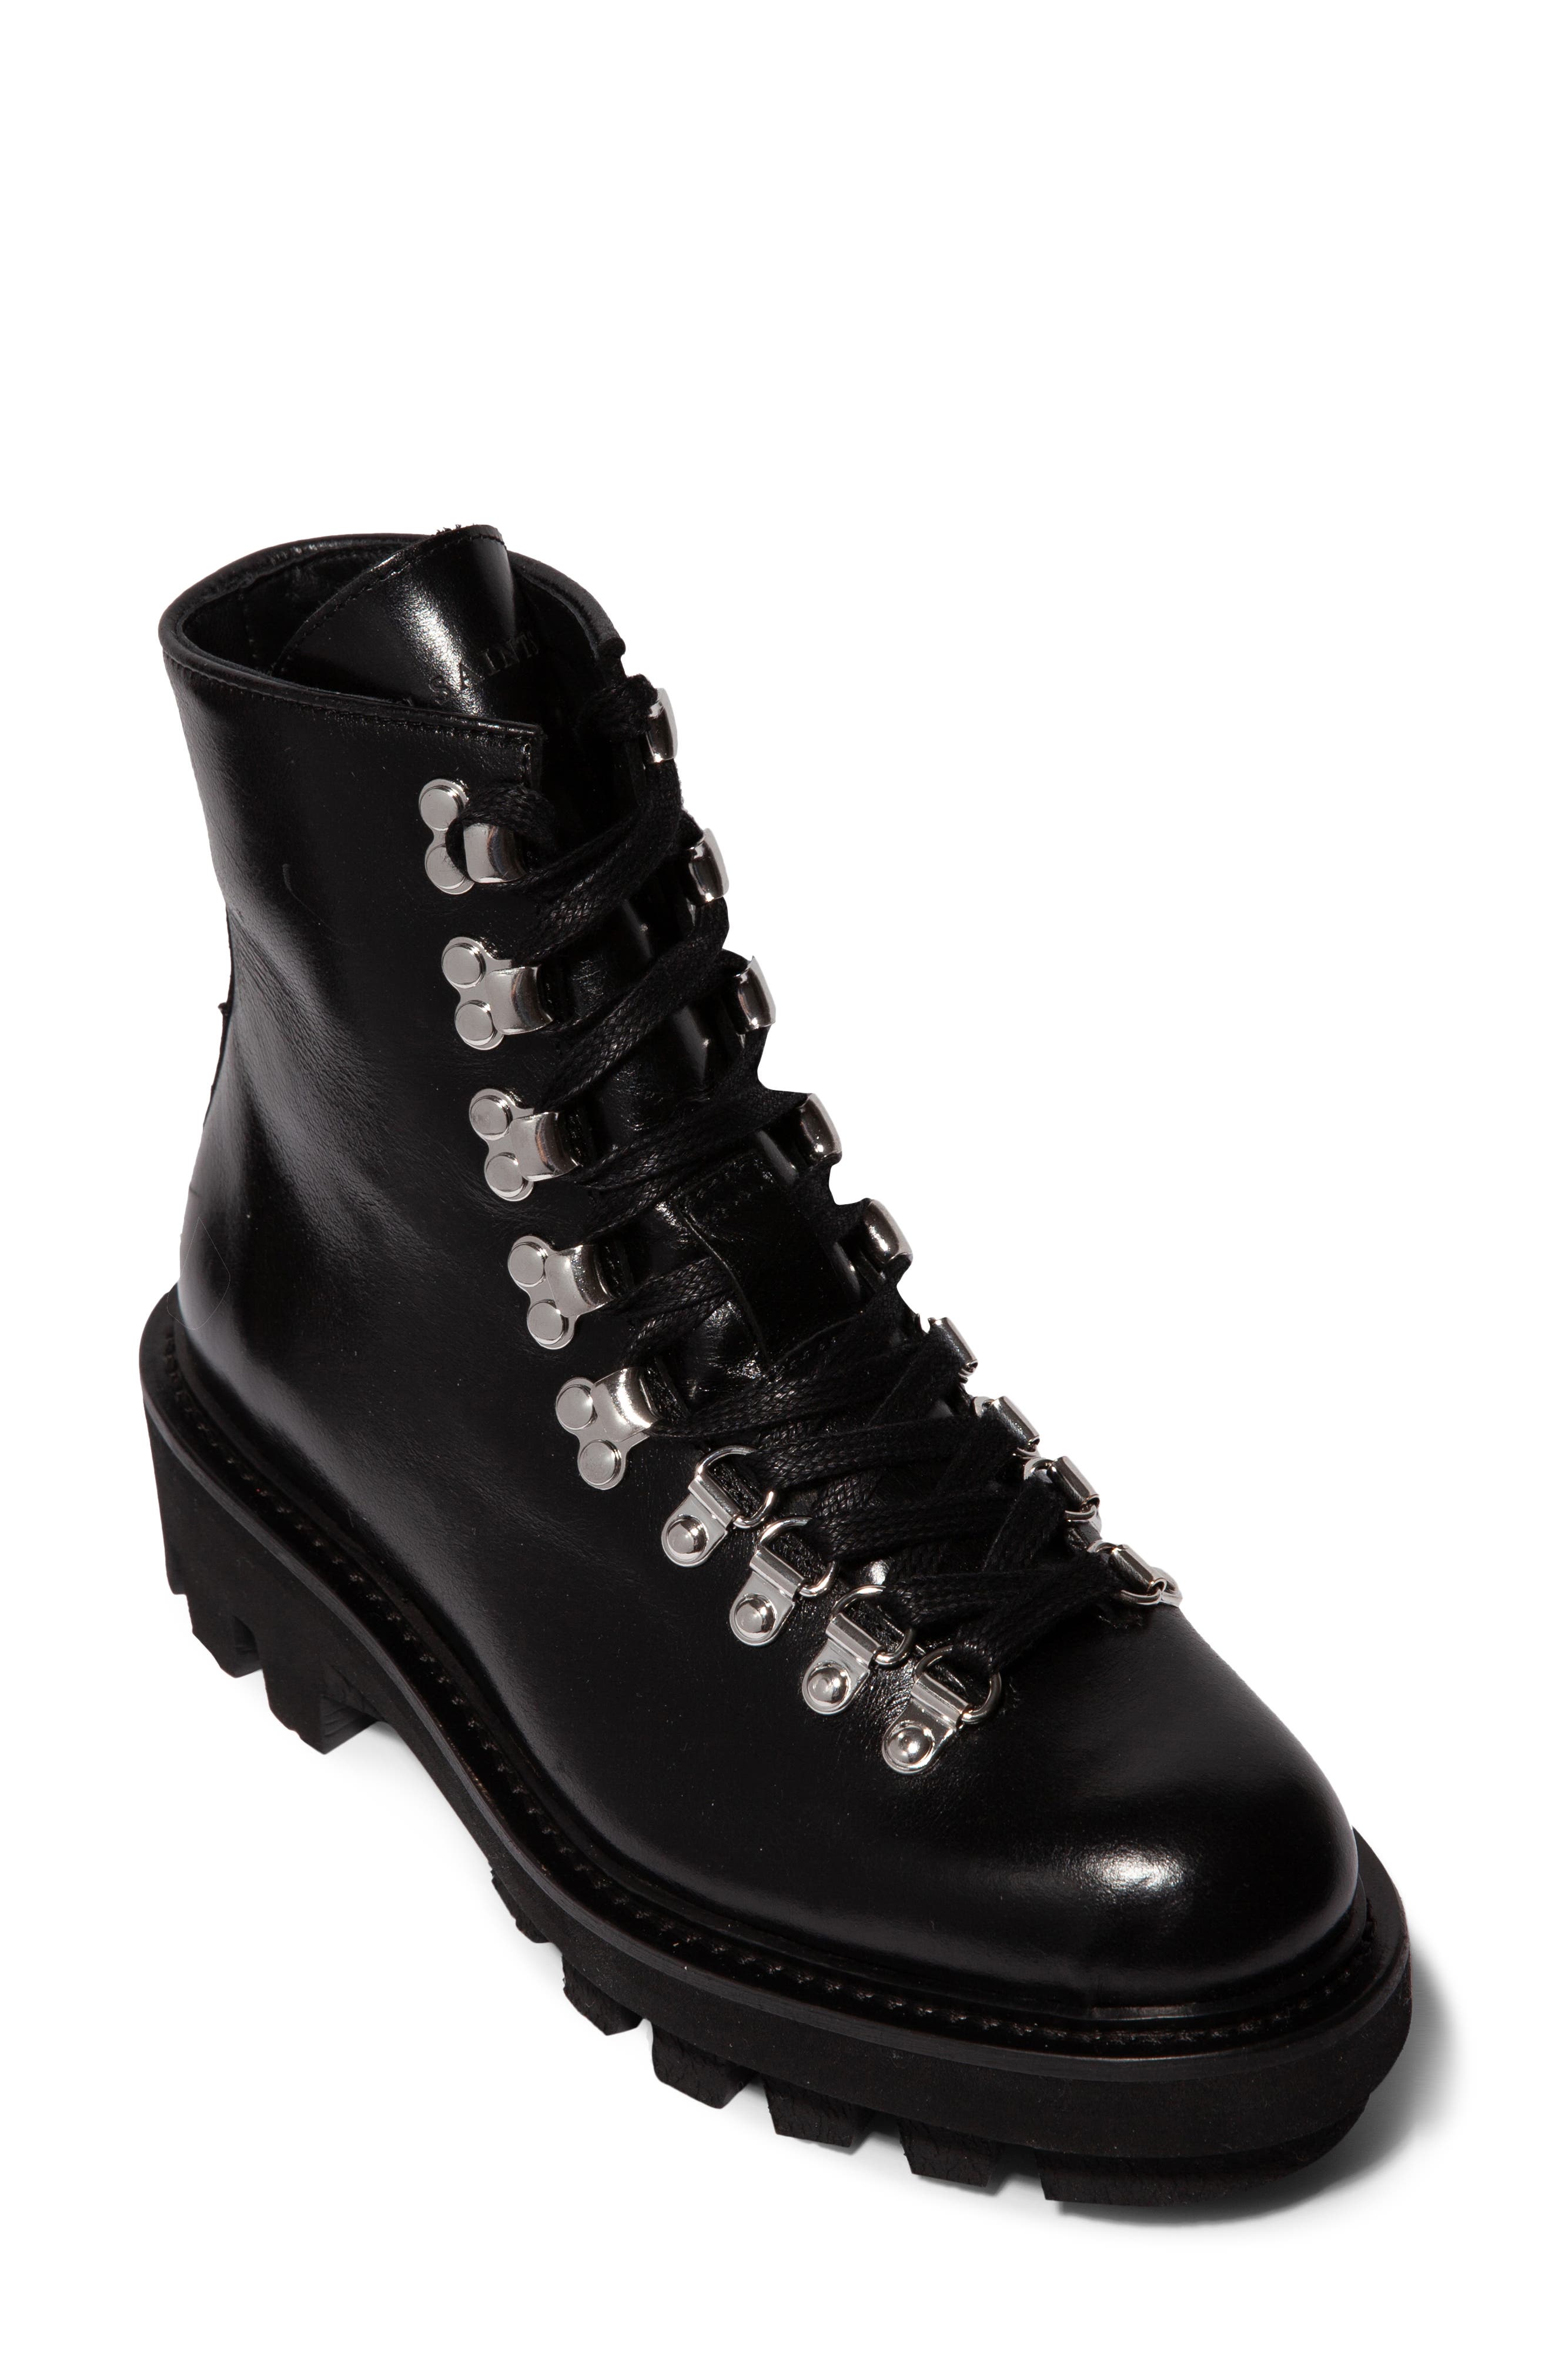 nordstrom black combat boots